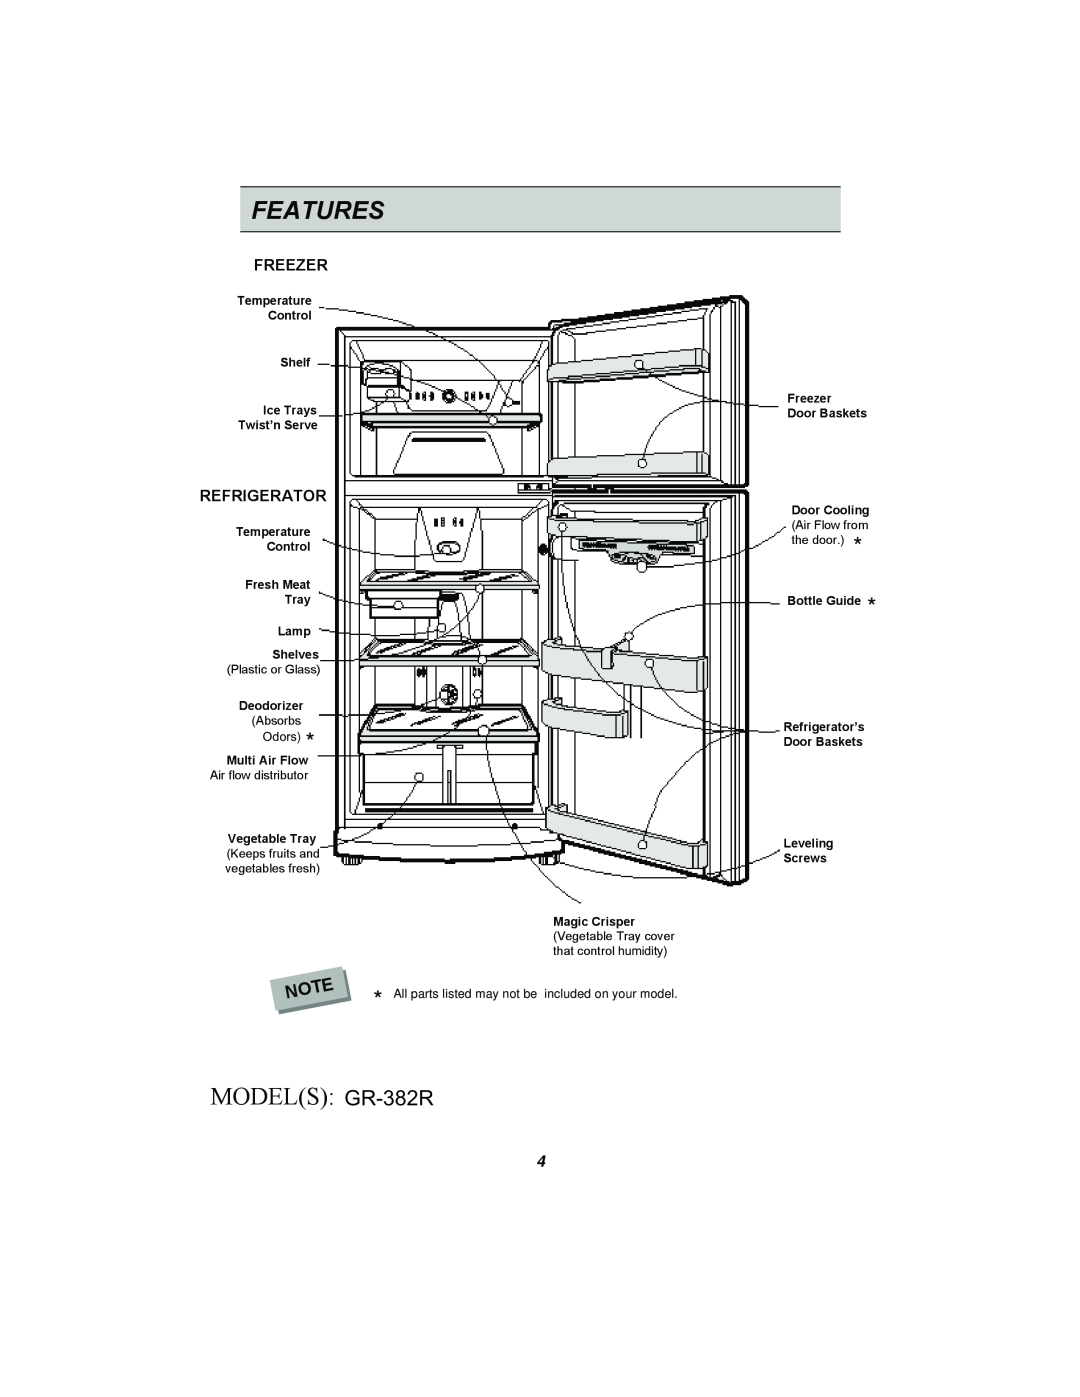 LG Electronics manual Featurtureses, MODELS GR-382R, Freezer, Refrigerator 